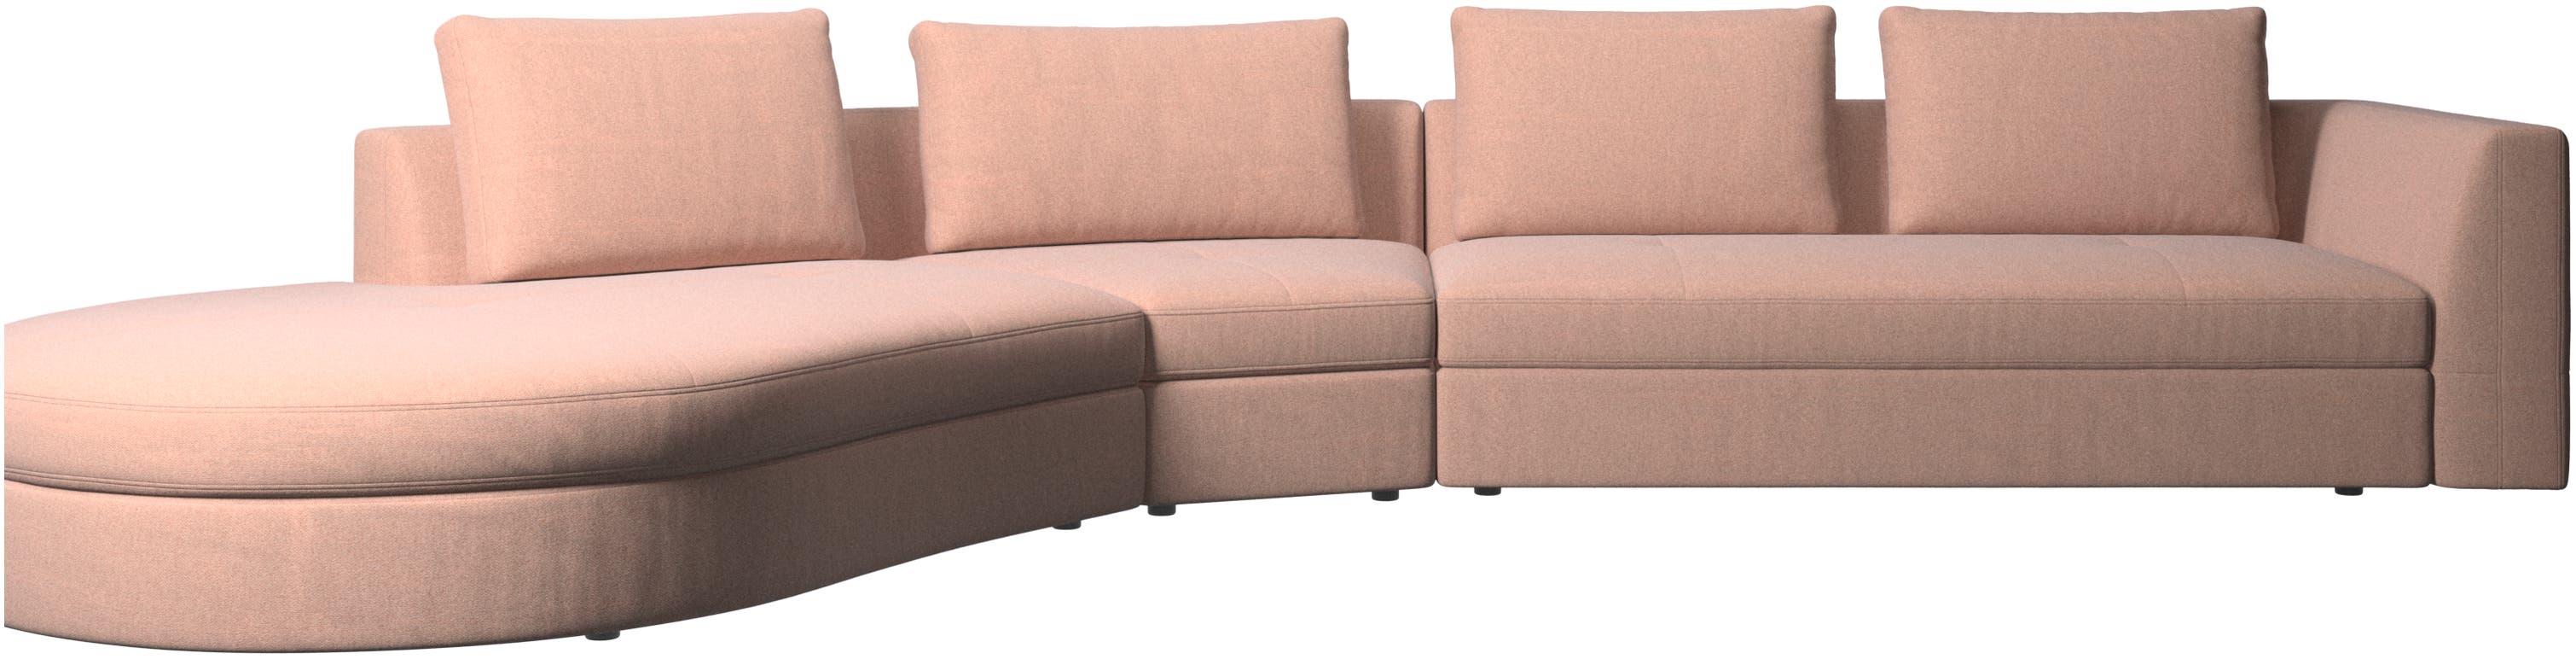 Bergamo sofa with round lounging unit, left